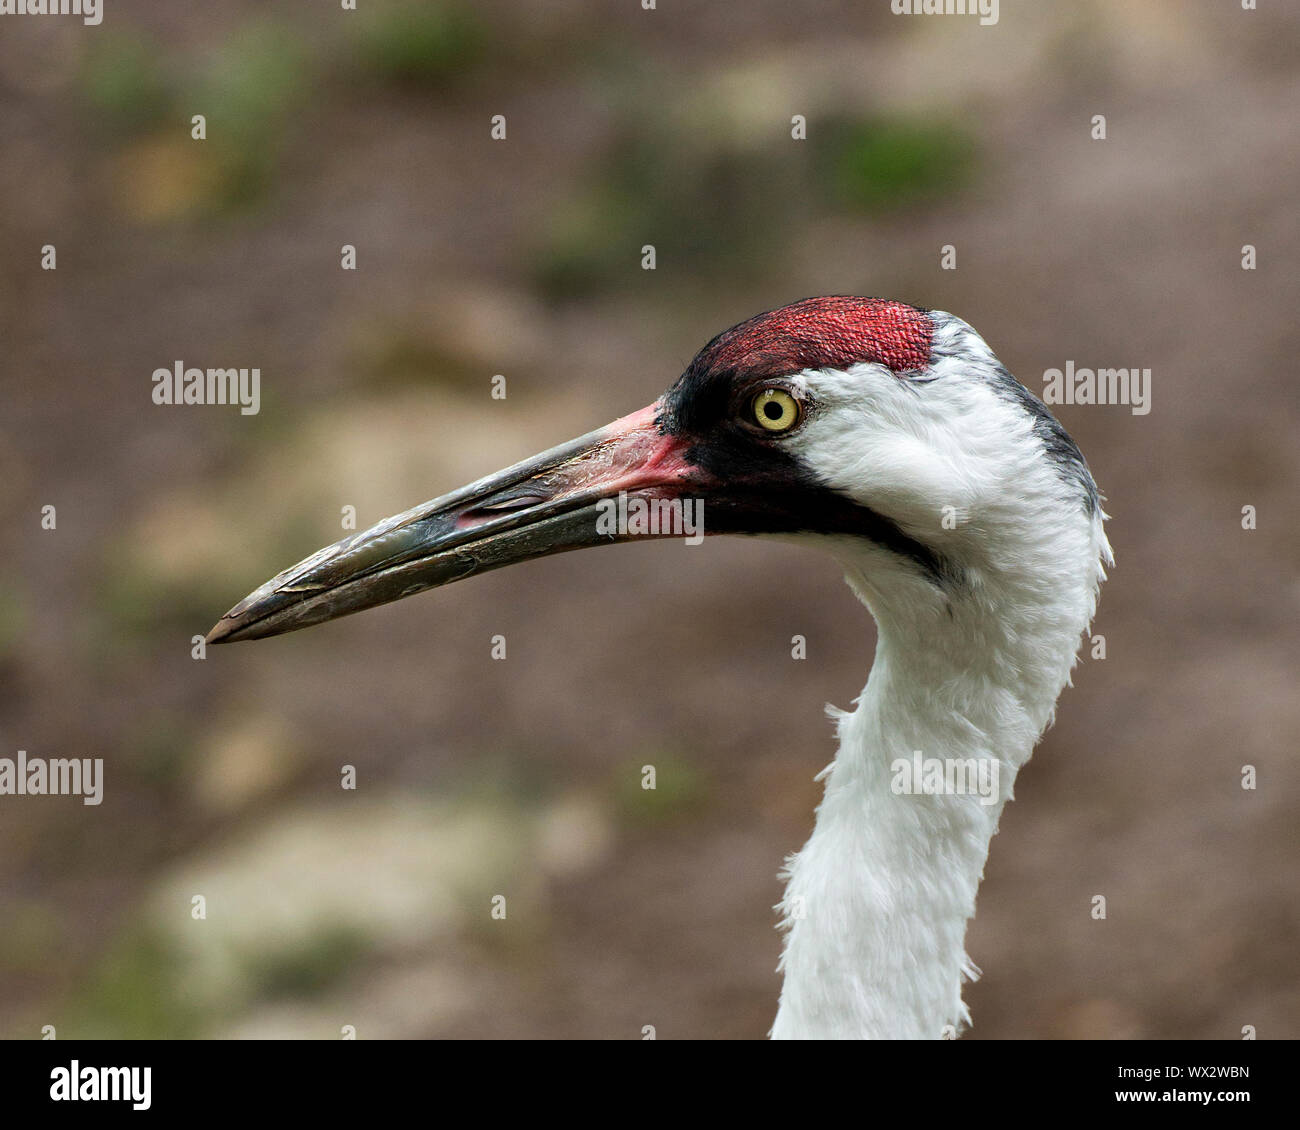 Whopping Crane bird close up enjoying its surrounding and environment. Stock Photo